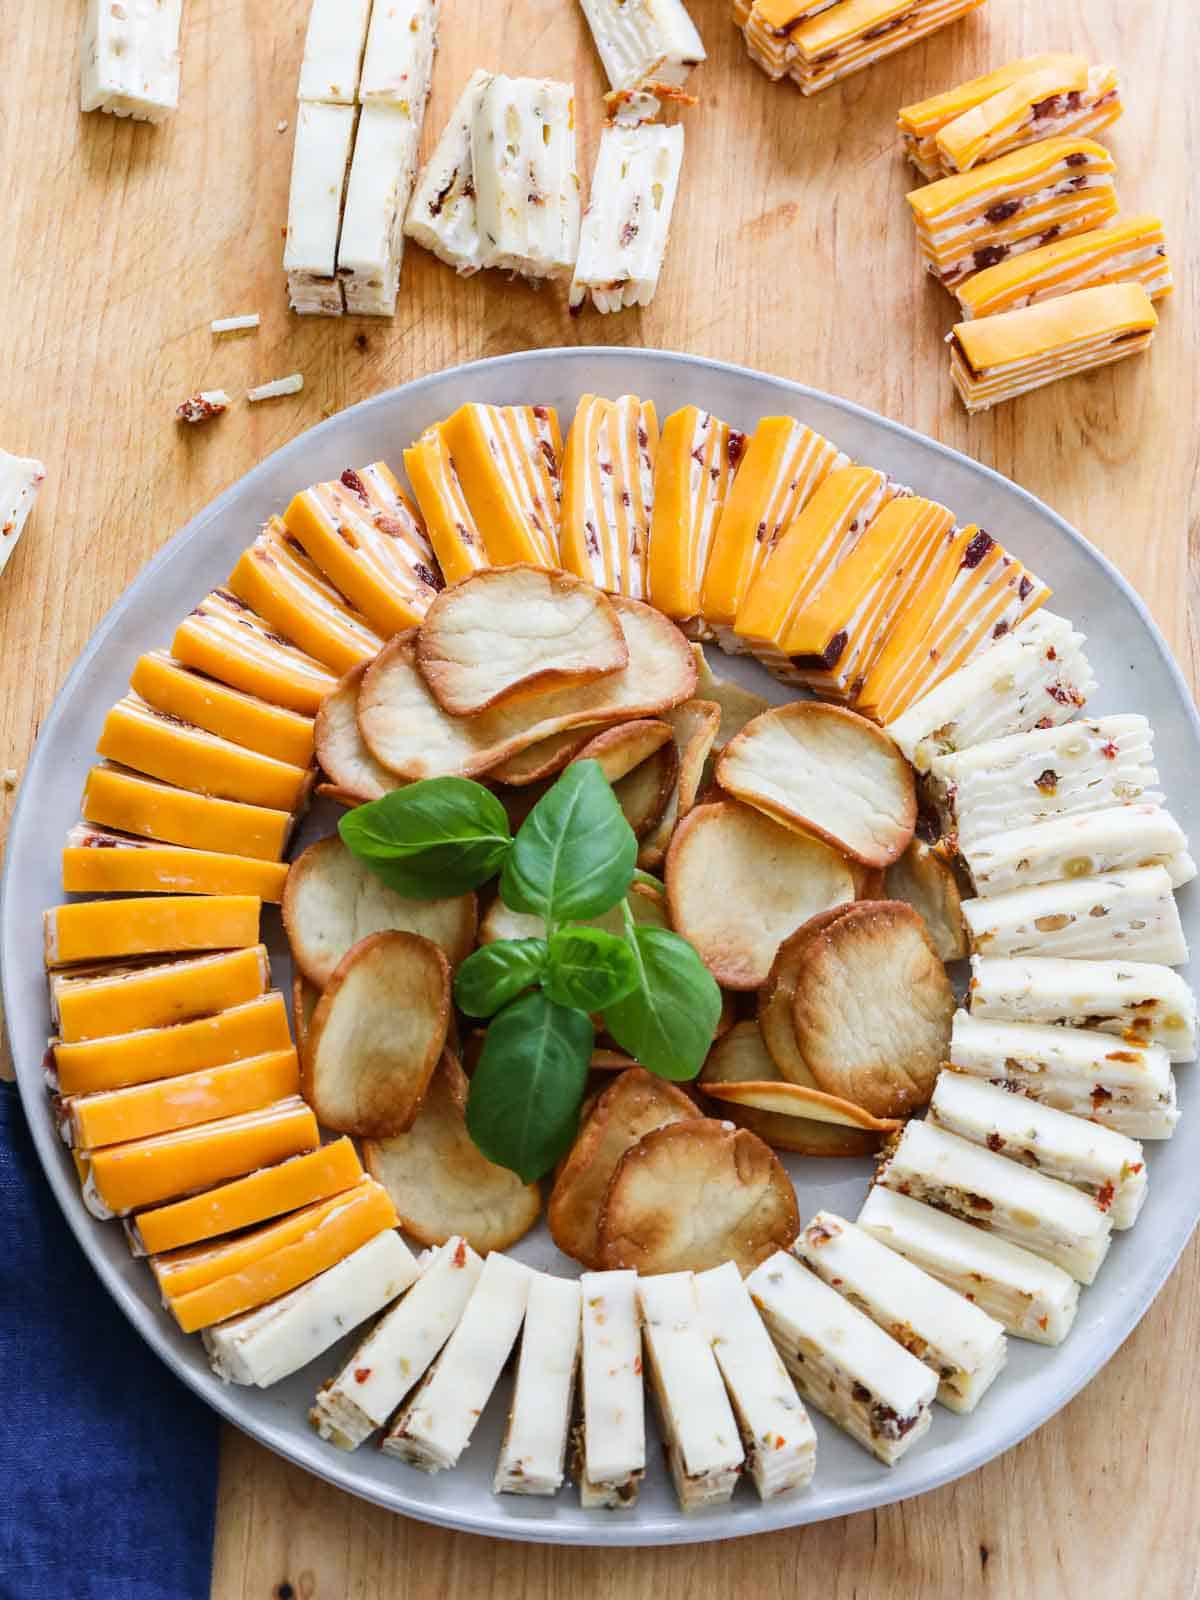 https://www.delicioustable.com/wp-content/uploads/2021/11/Cheese-Appetizer-sliced-on-platter.jpg